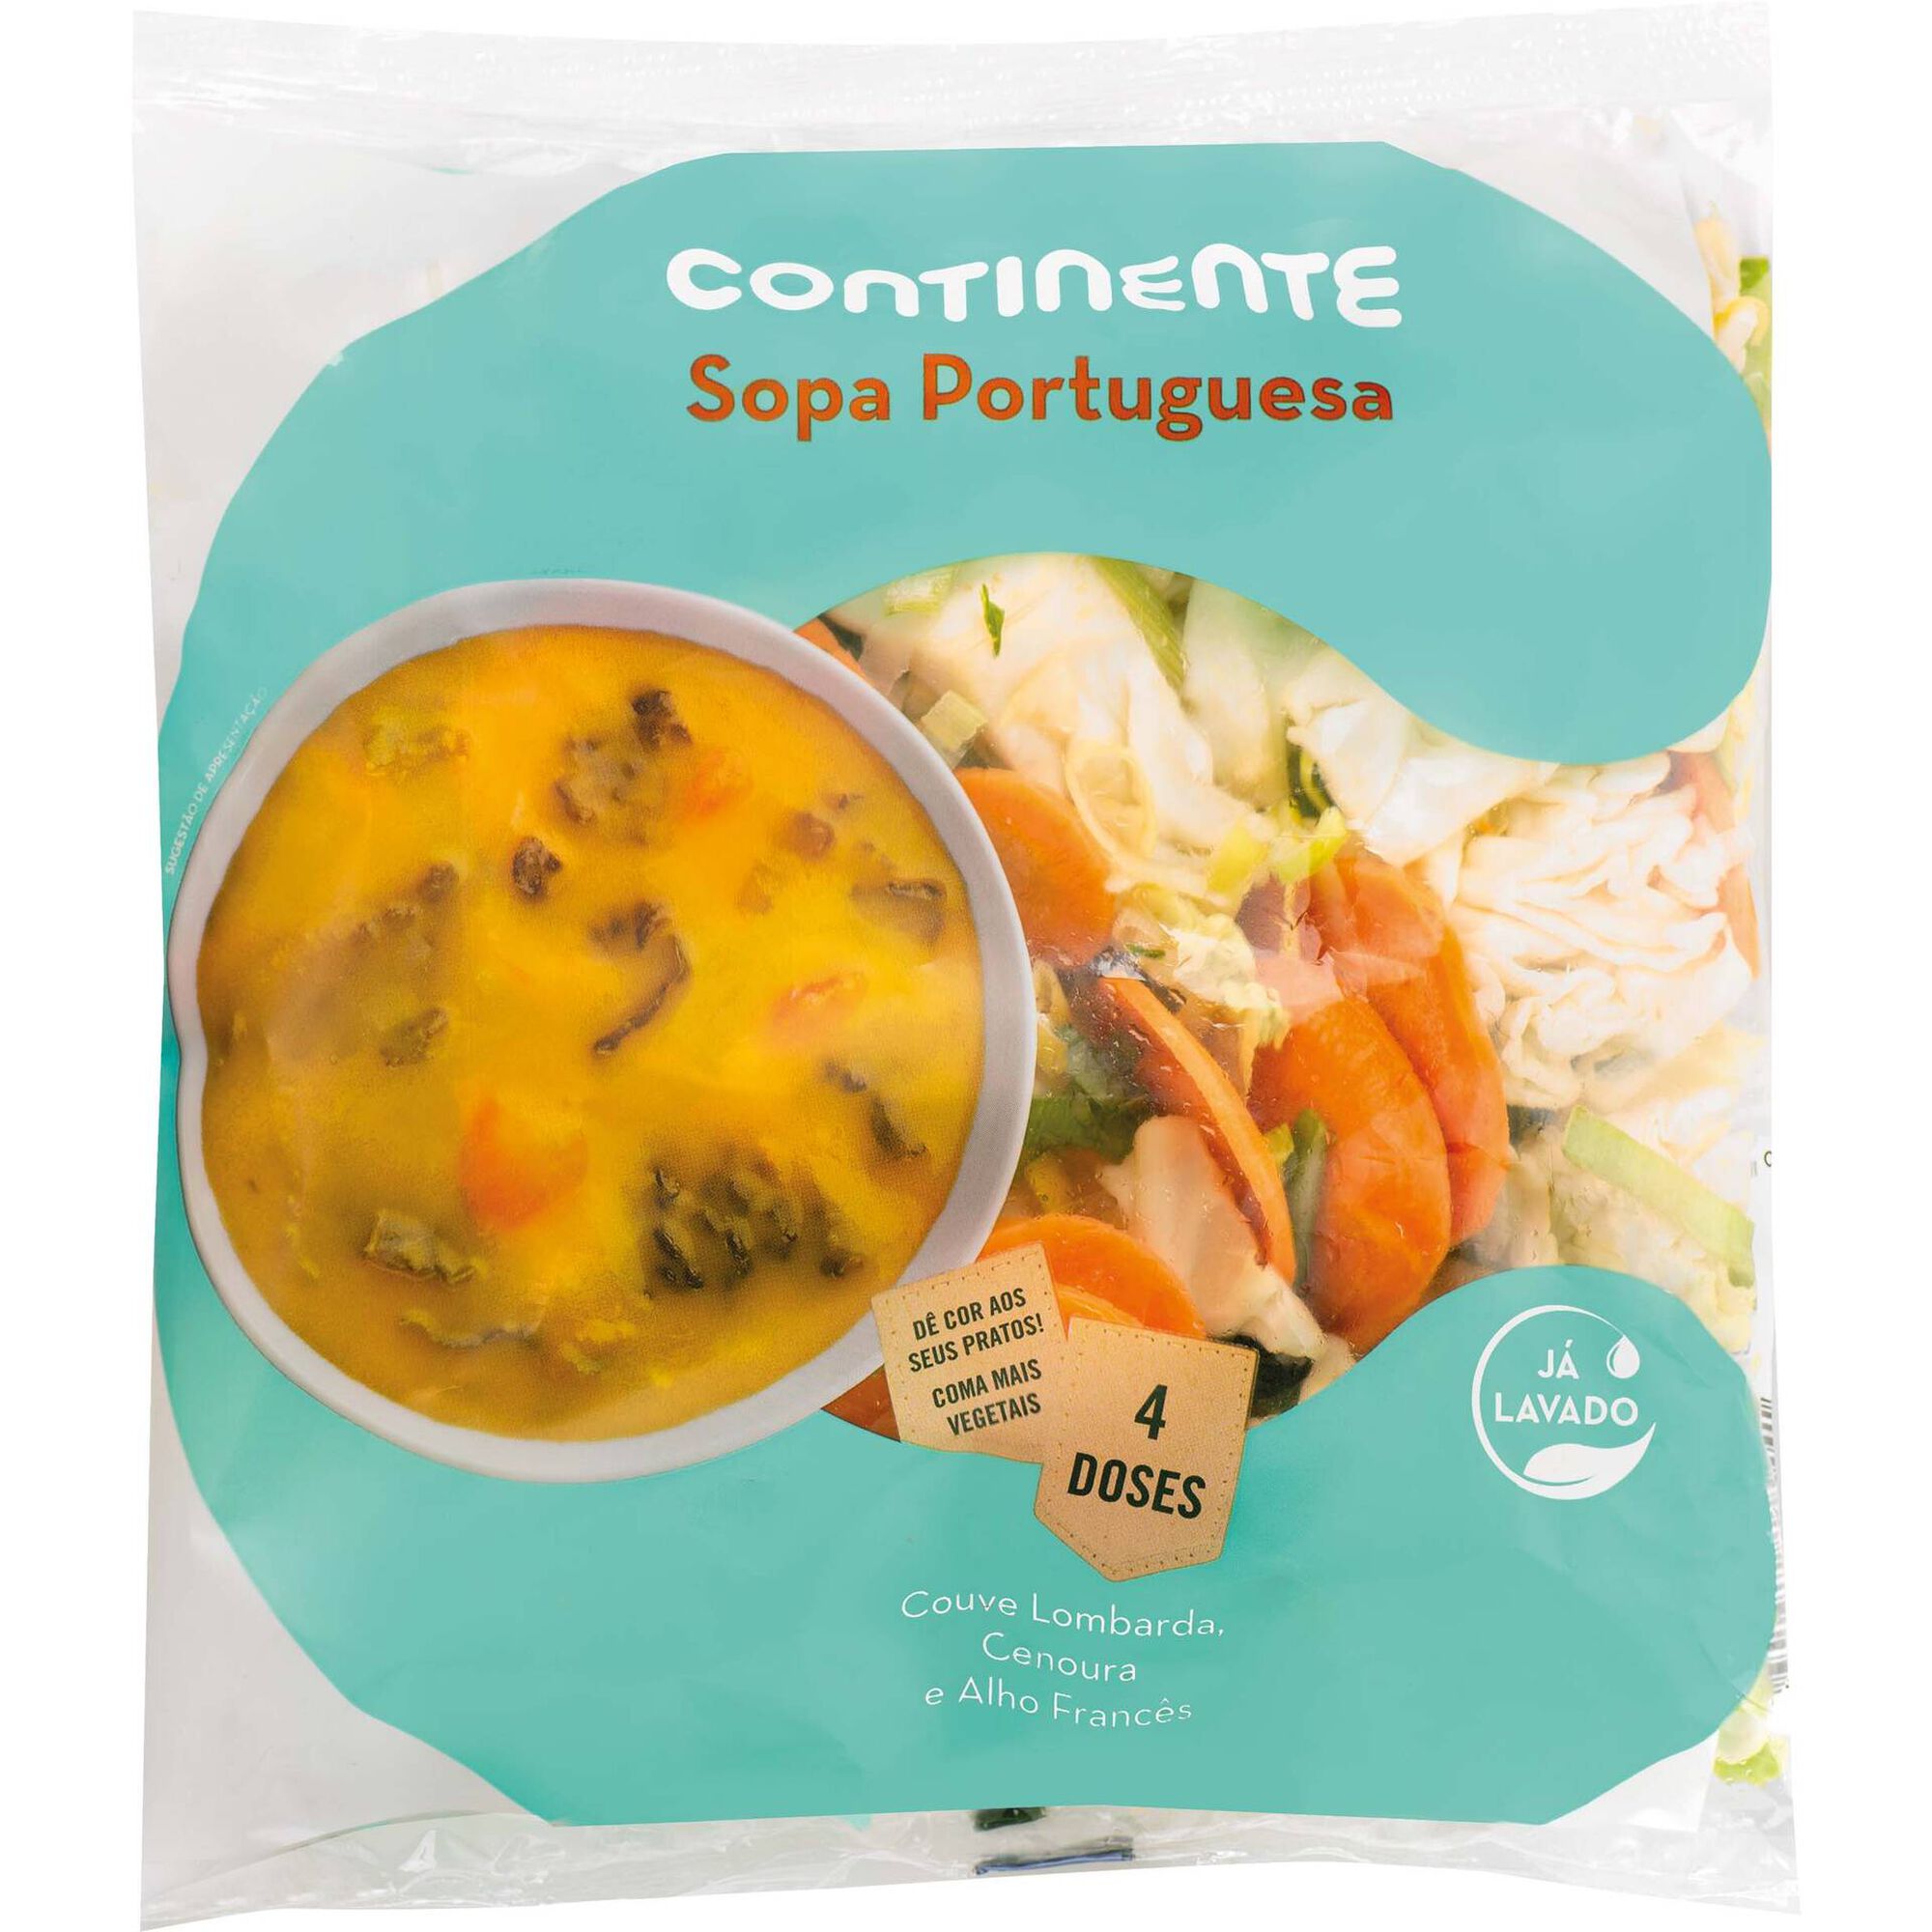 Sopa Portuguesa